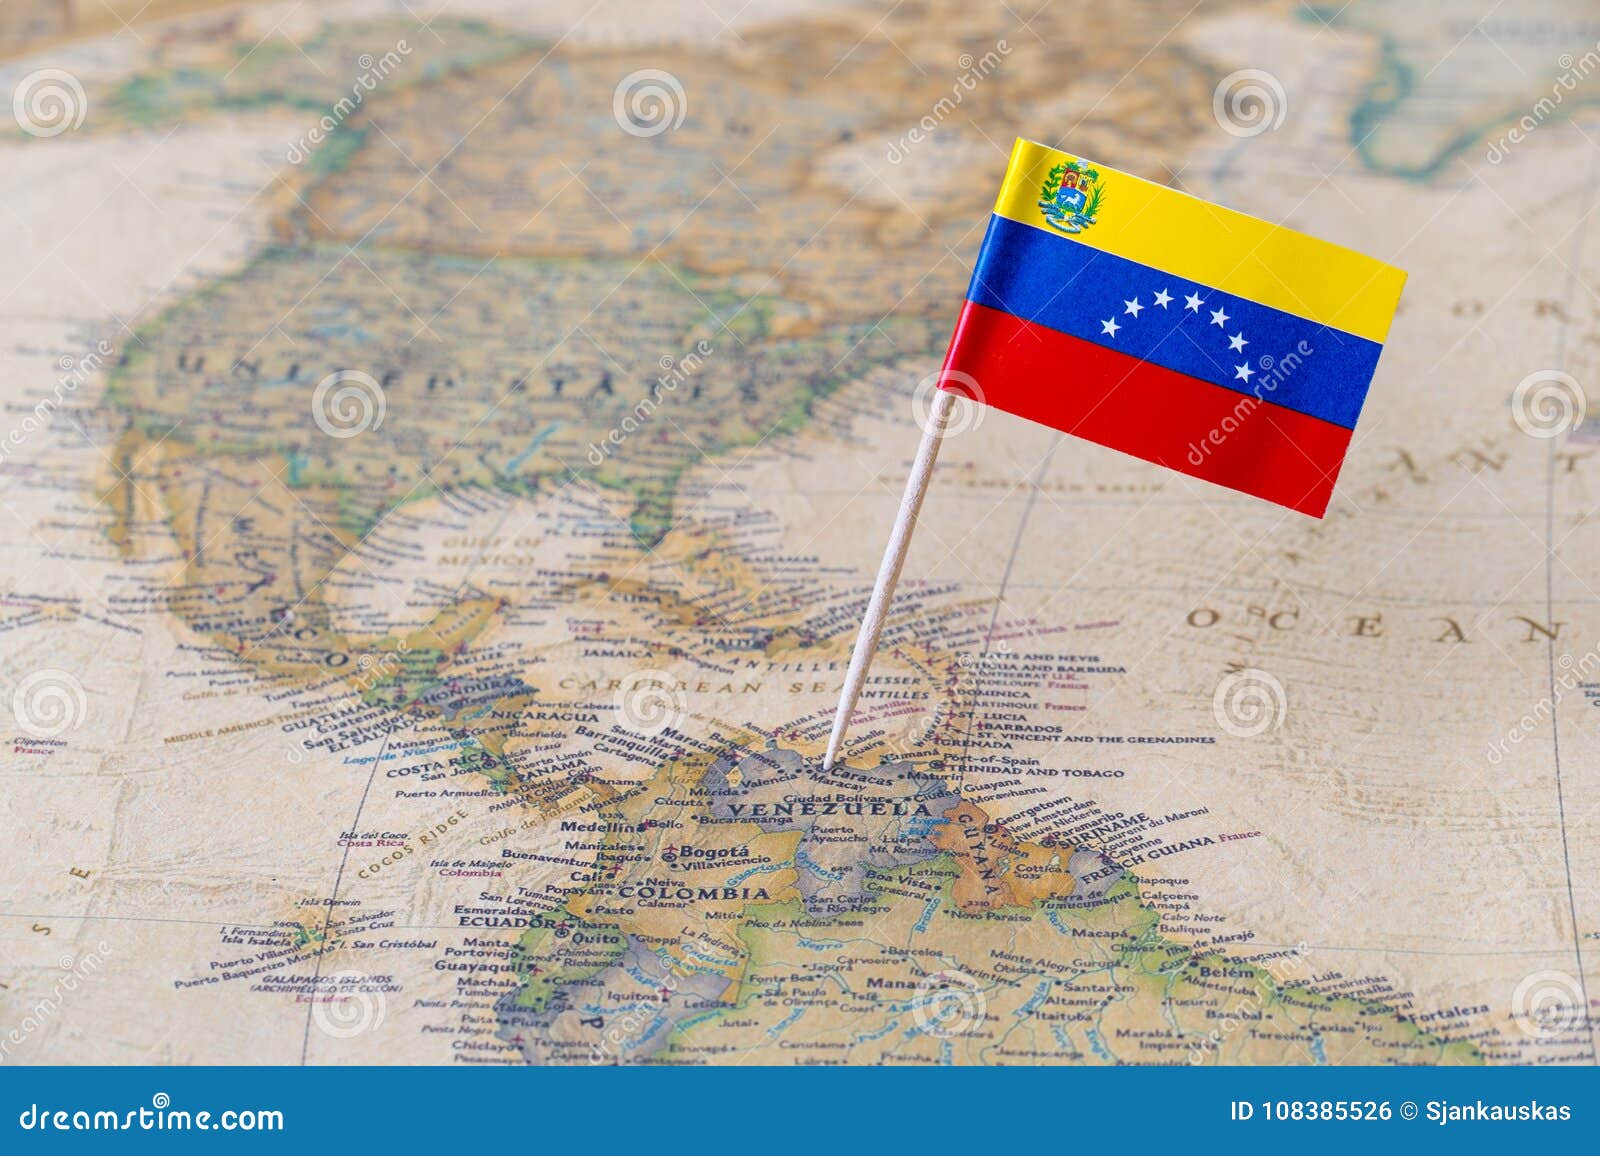 venezuela flag pin on map